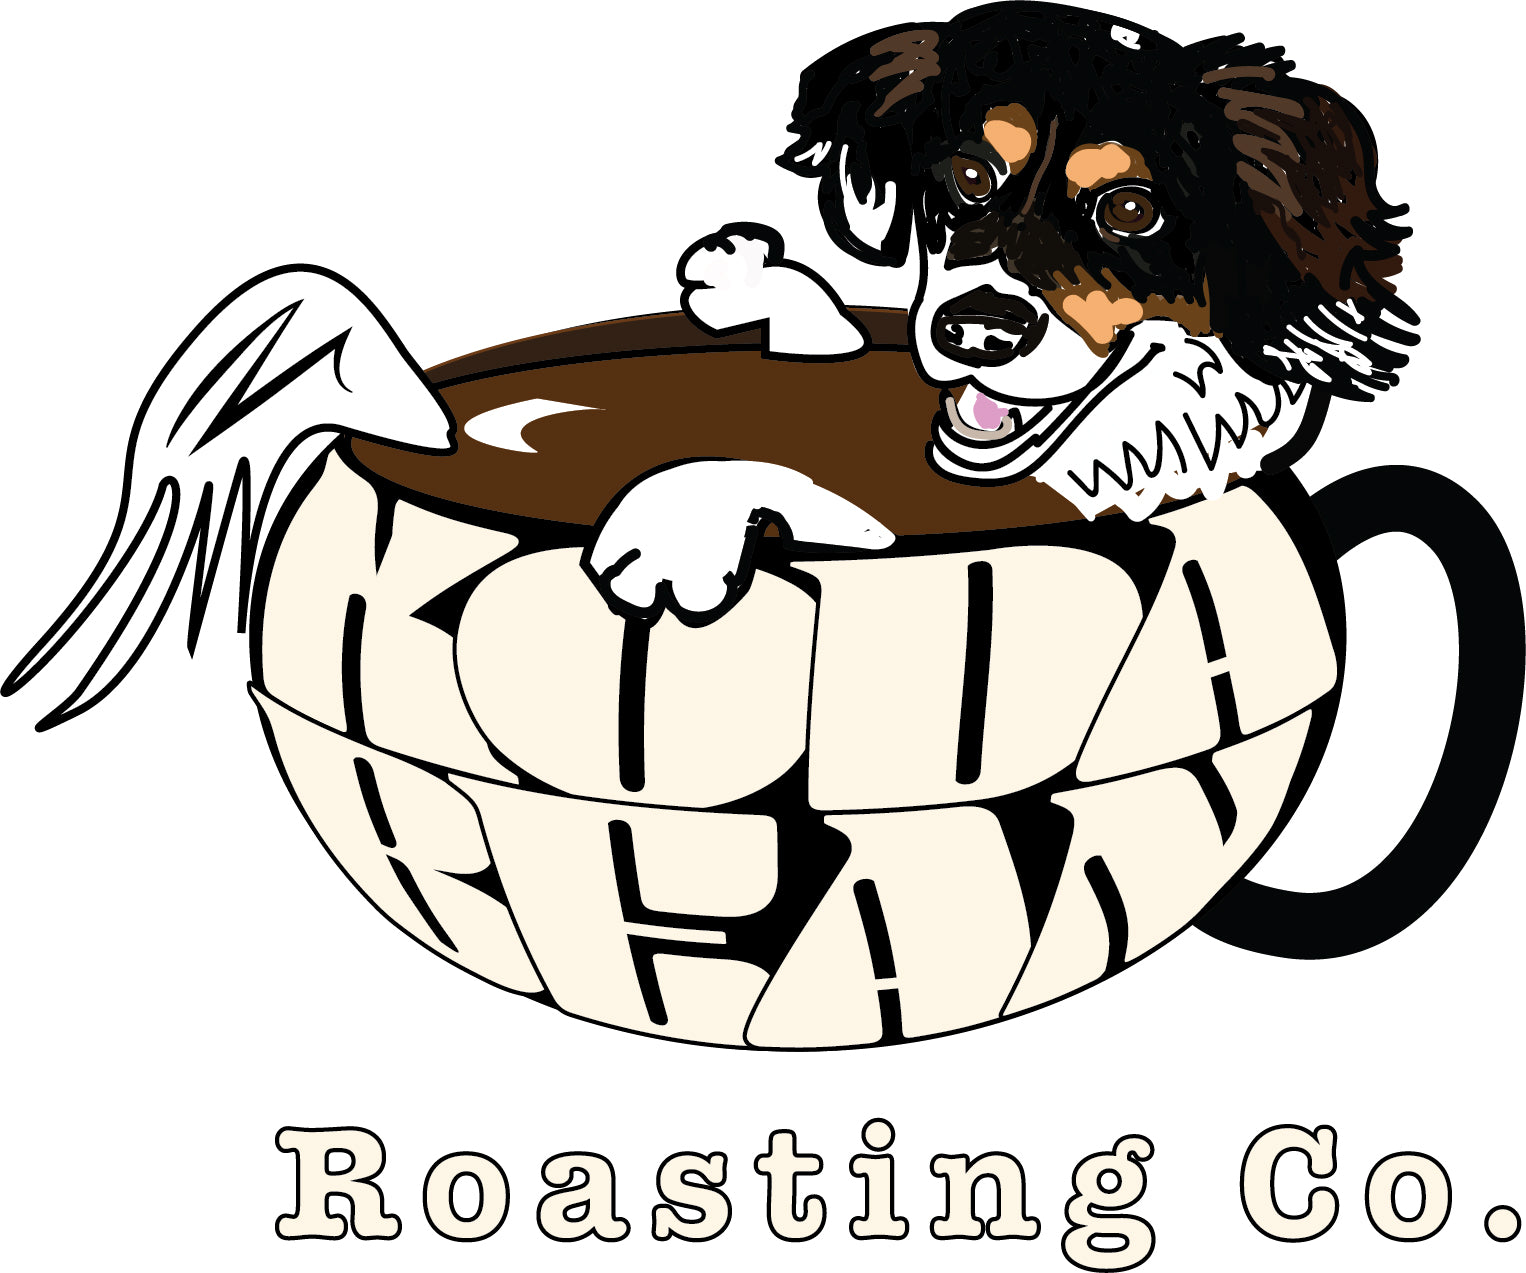 koda-bean-roasting-co